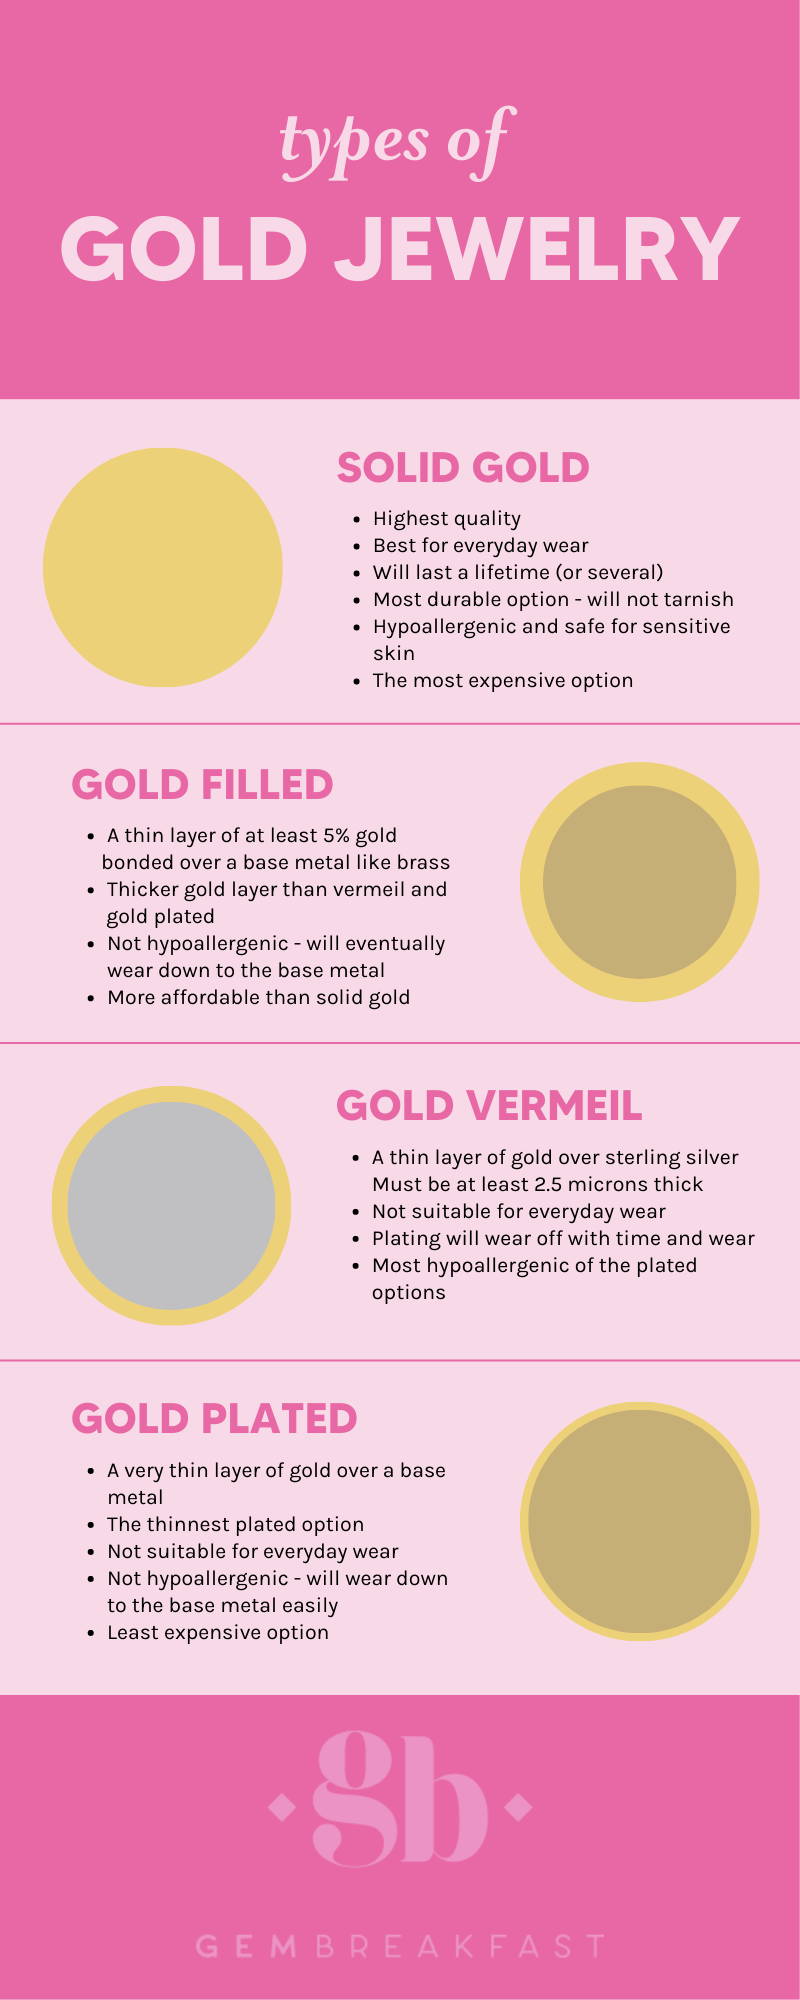 Solid gold vs gold filled vs gold vermeil vs gold plated